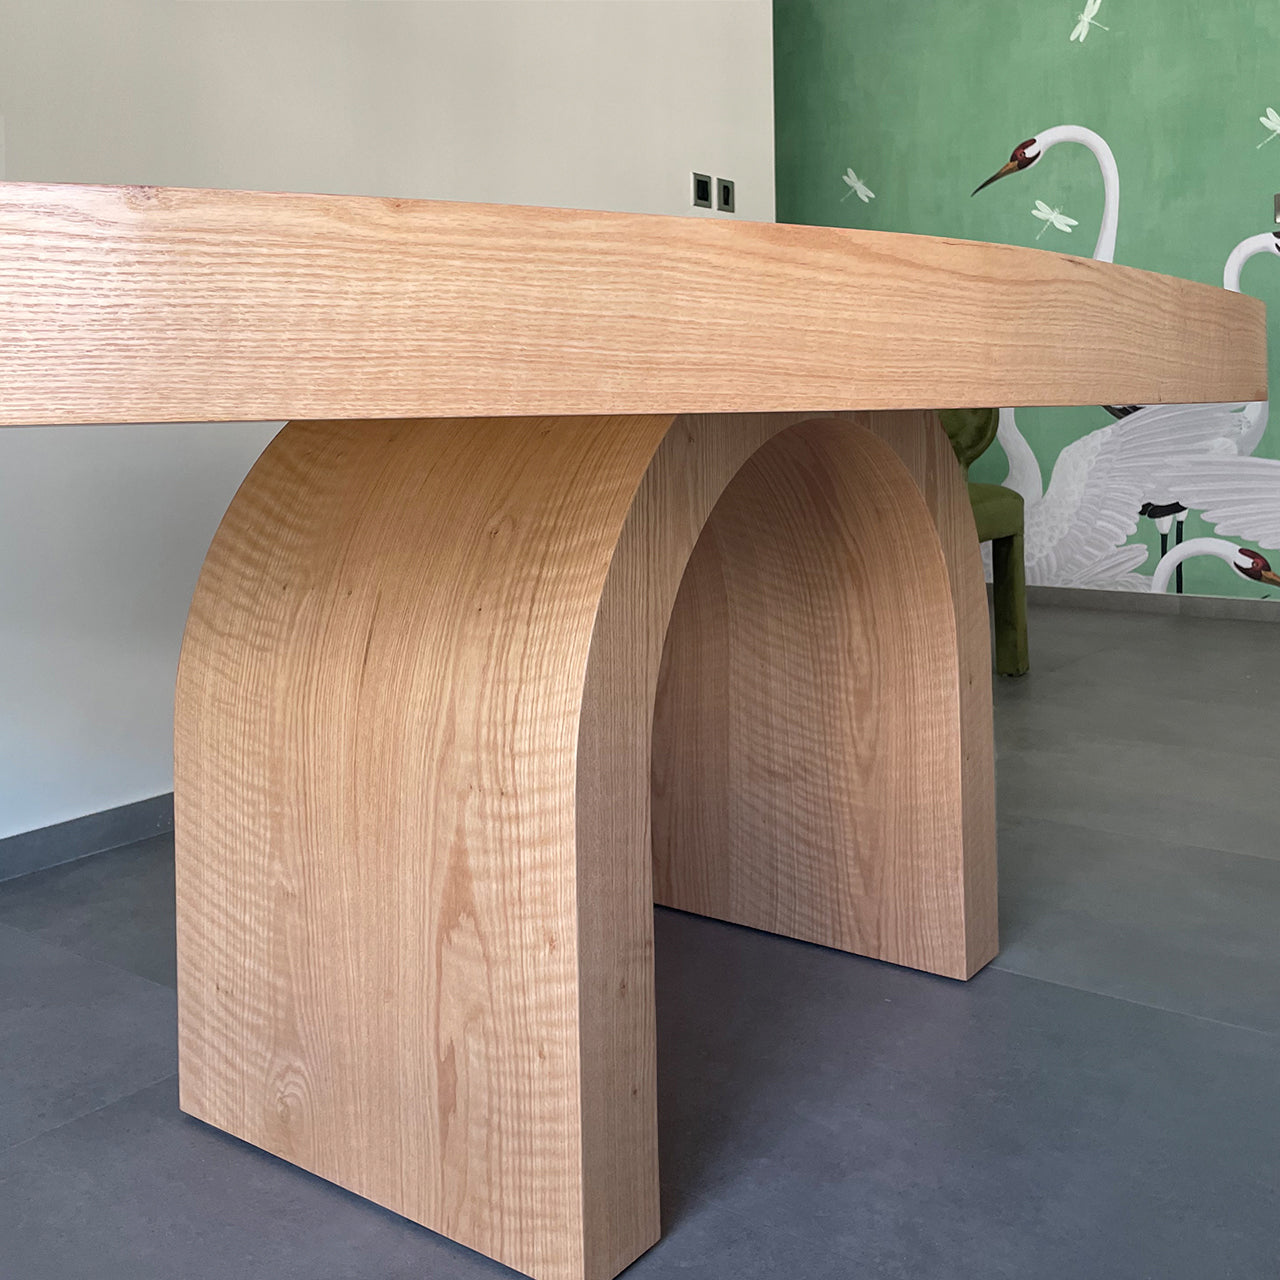 Oak Wood Oval Dining Table